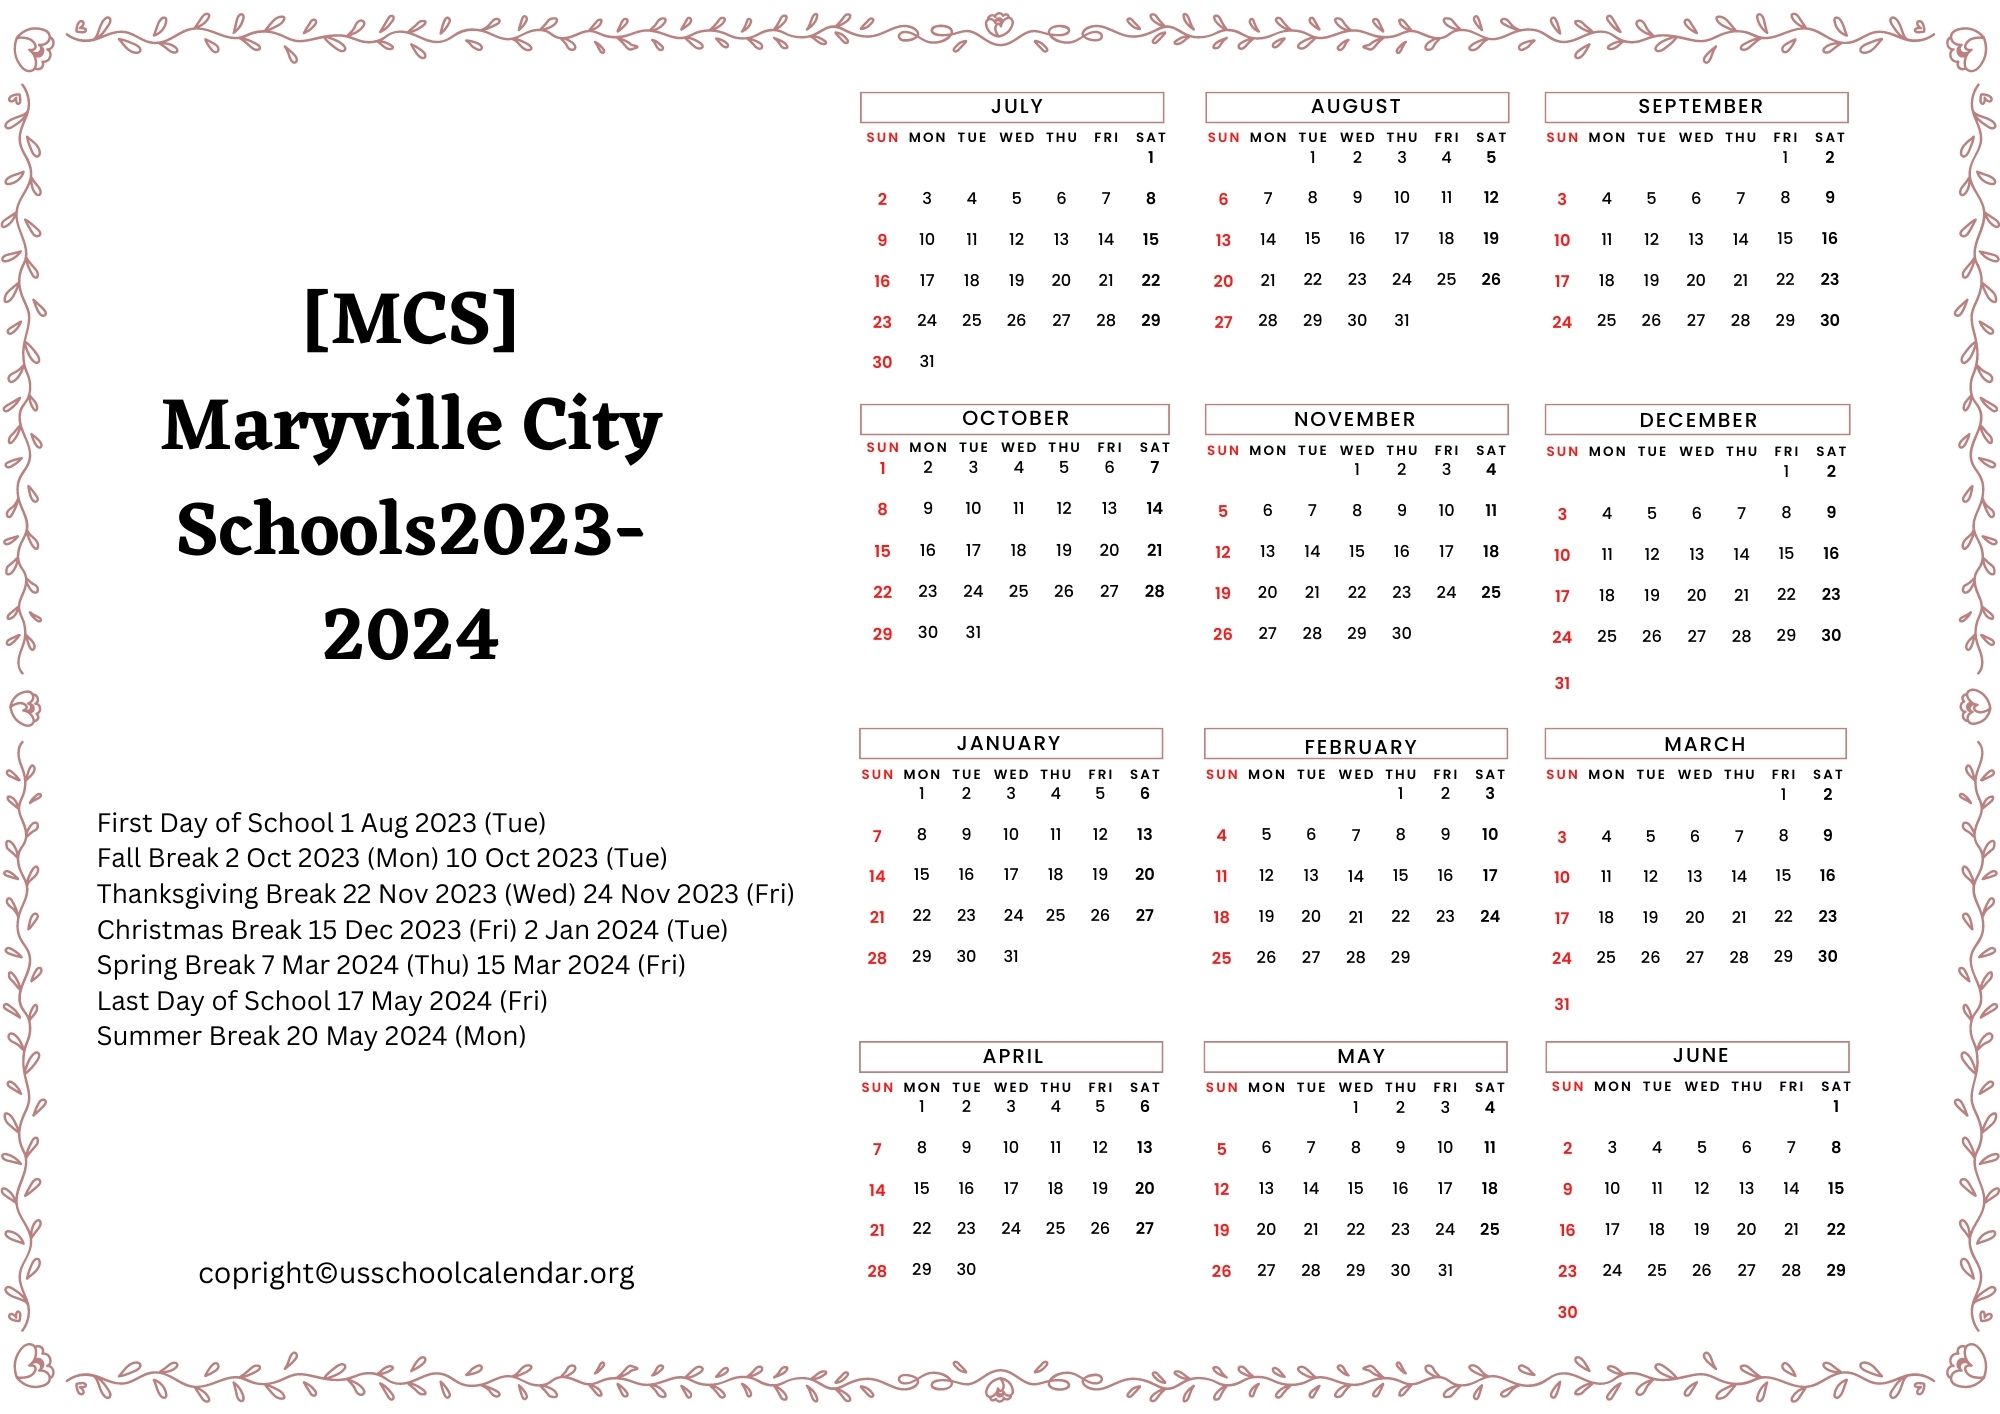 [MCS] Maryville City Schools Calendar with Holidays 20232024